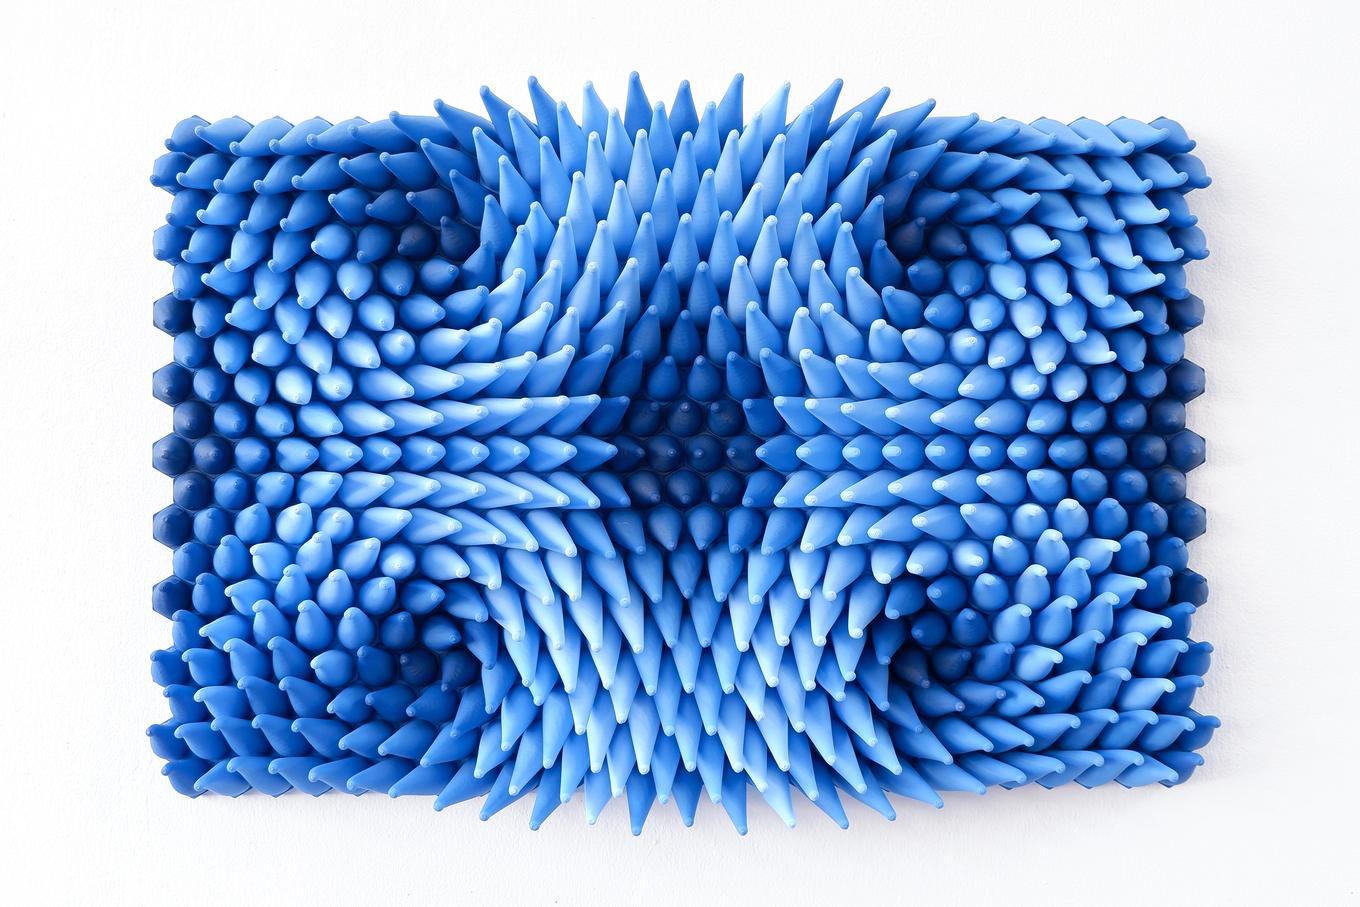 Vortices | Herschel Shapiro | Unique Dimensional Mosaic